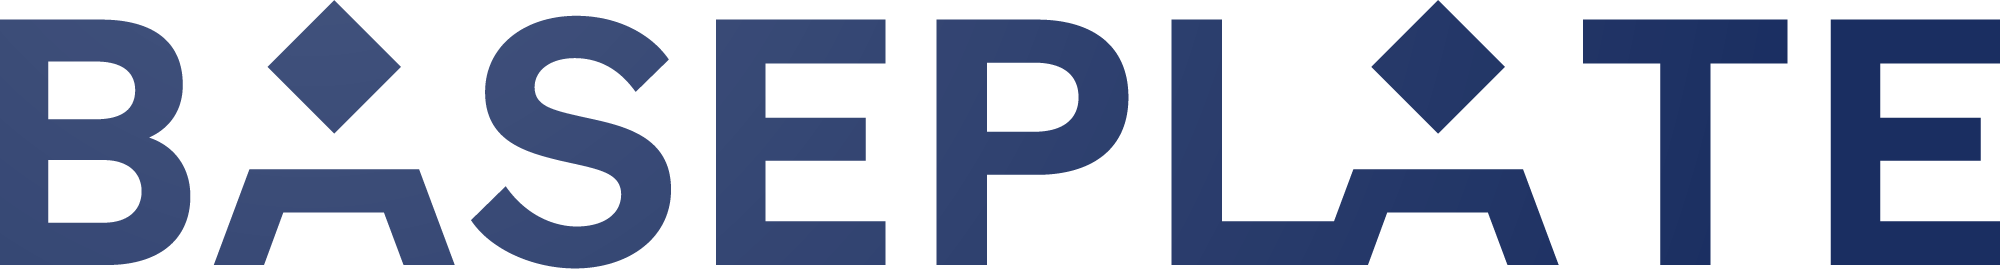 baseplate logo